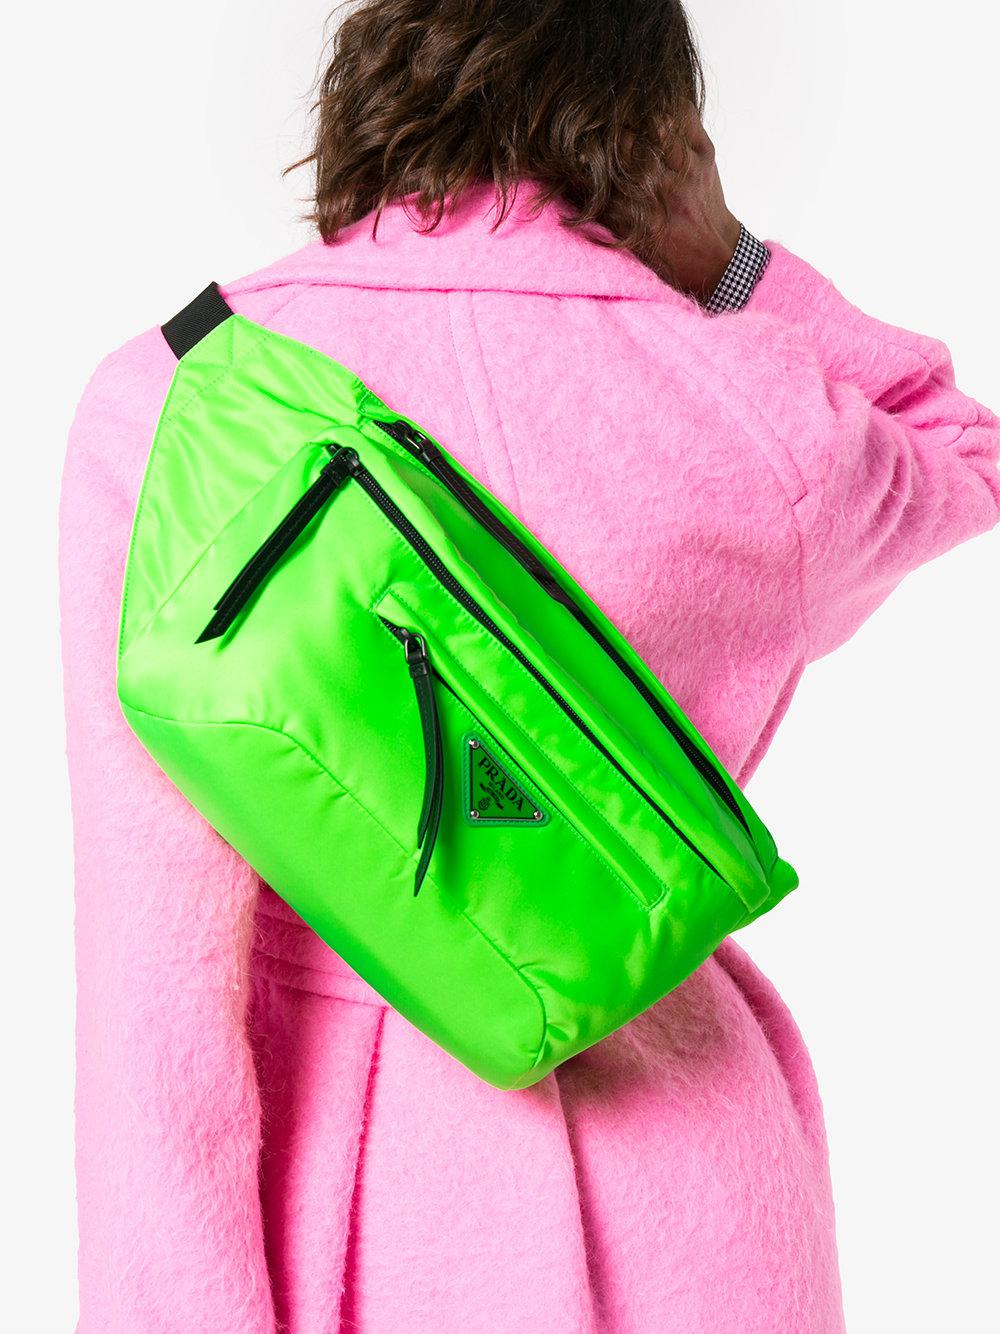 Prada Synthetic Fluorescent Nylon Belt Bag in Green - Lyst